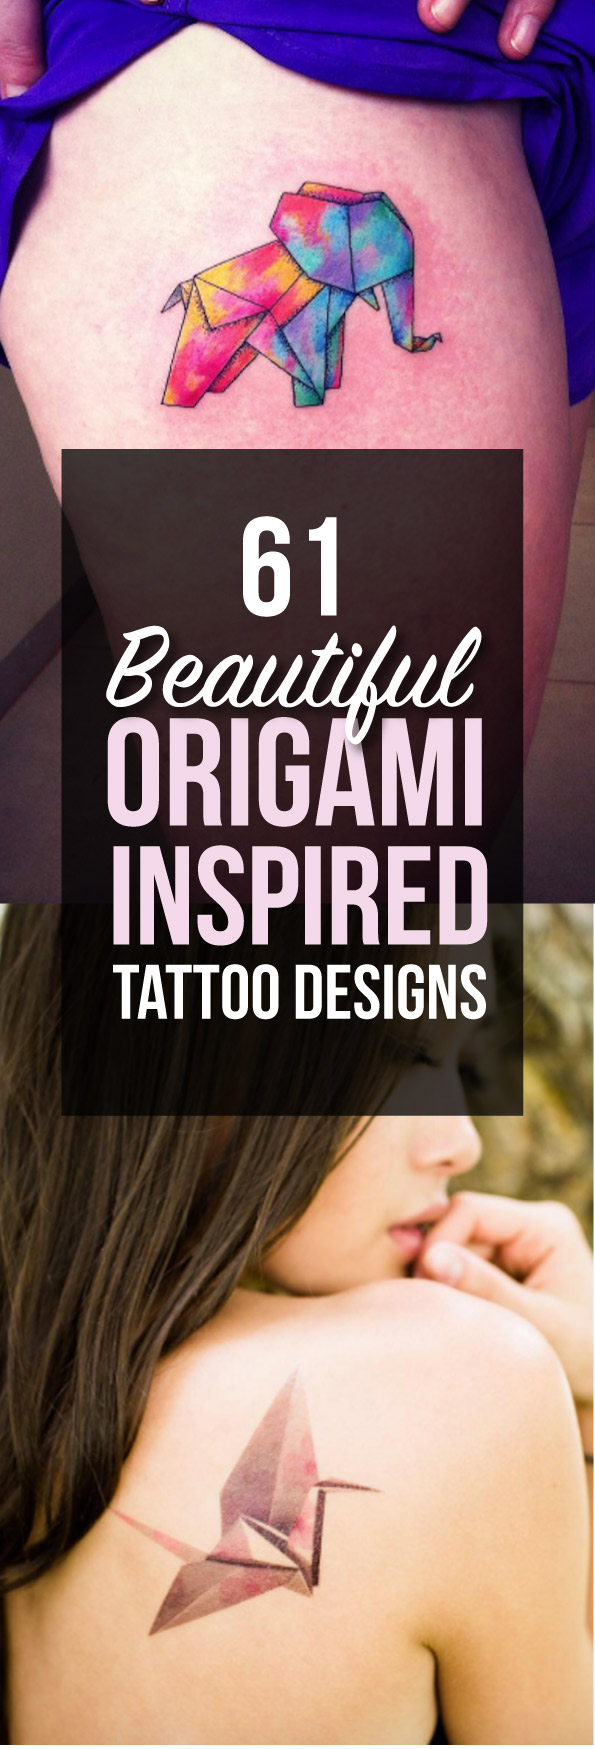 61 Beautiful Origami Inspired Tattoo Designs 